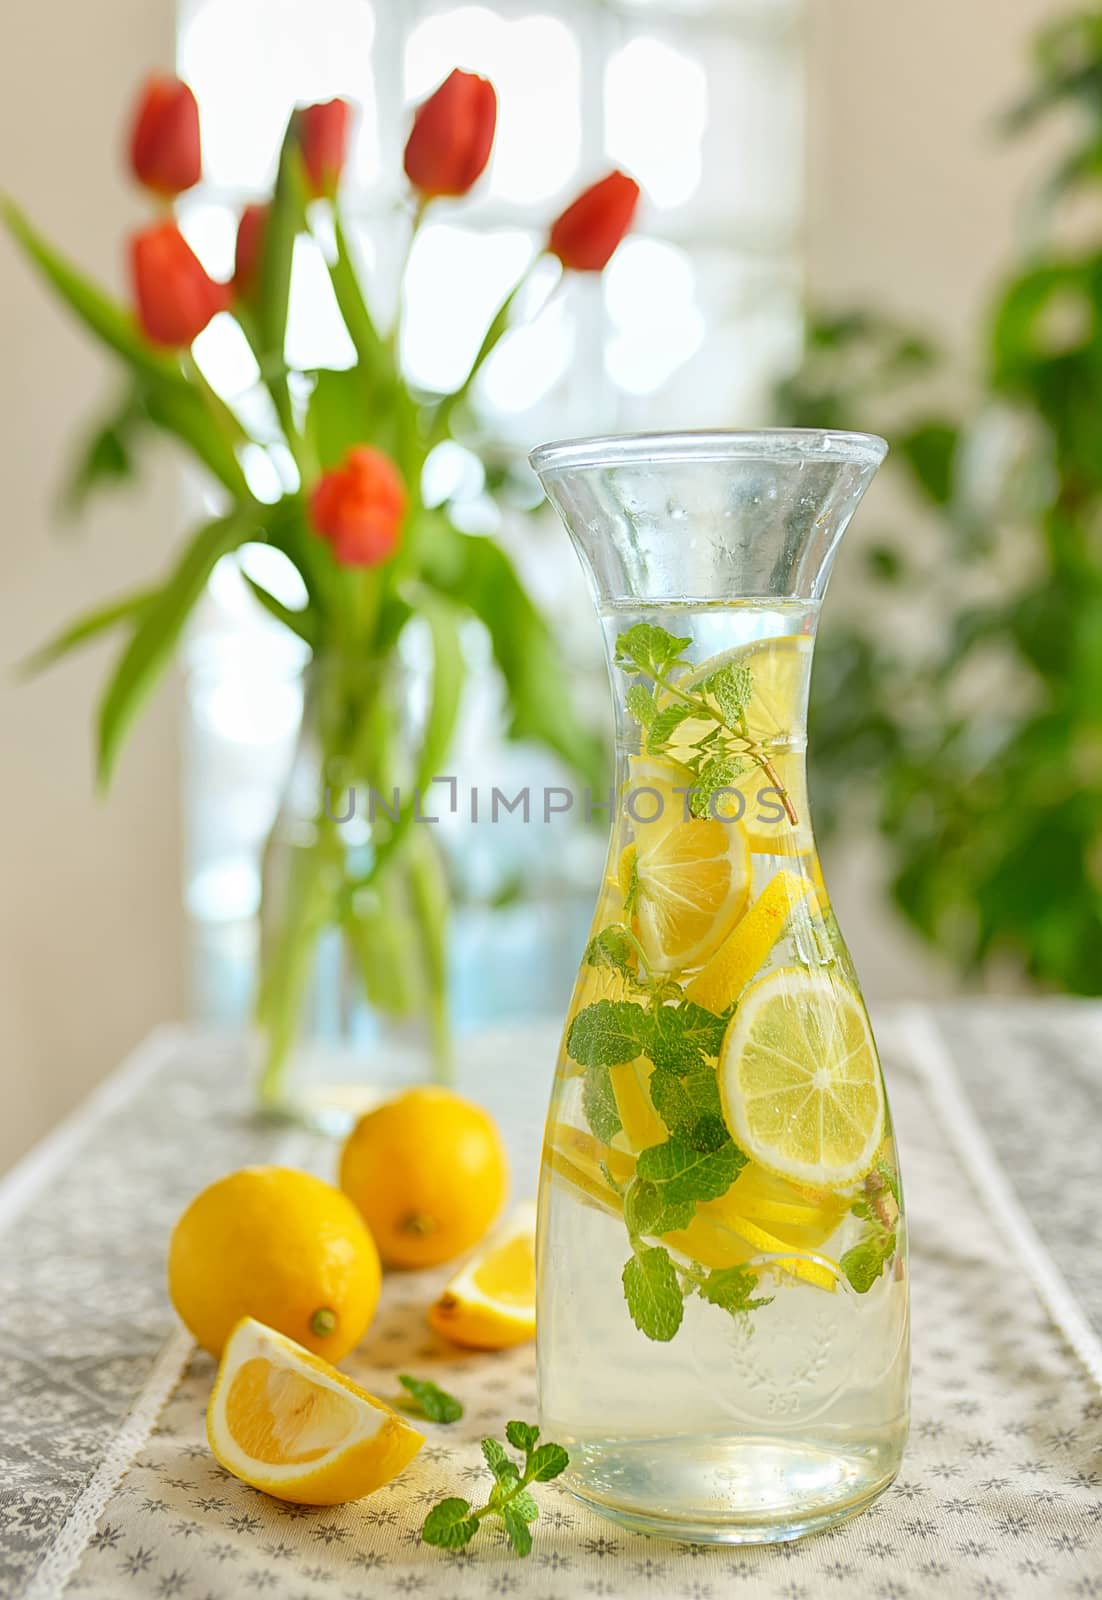 Fresh limes and lemonade by jordachelr